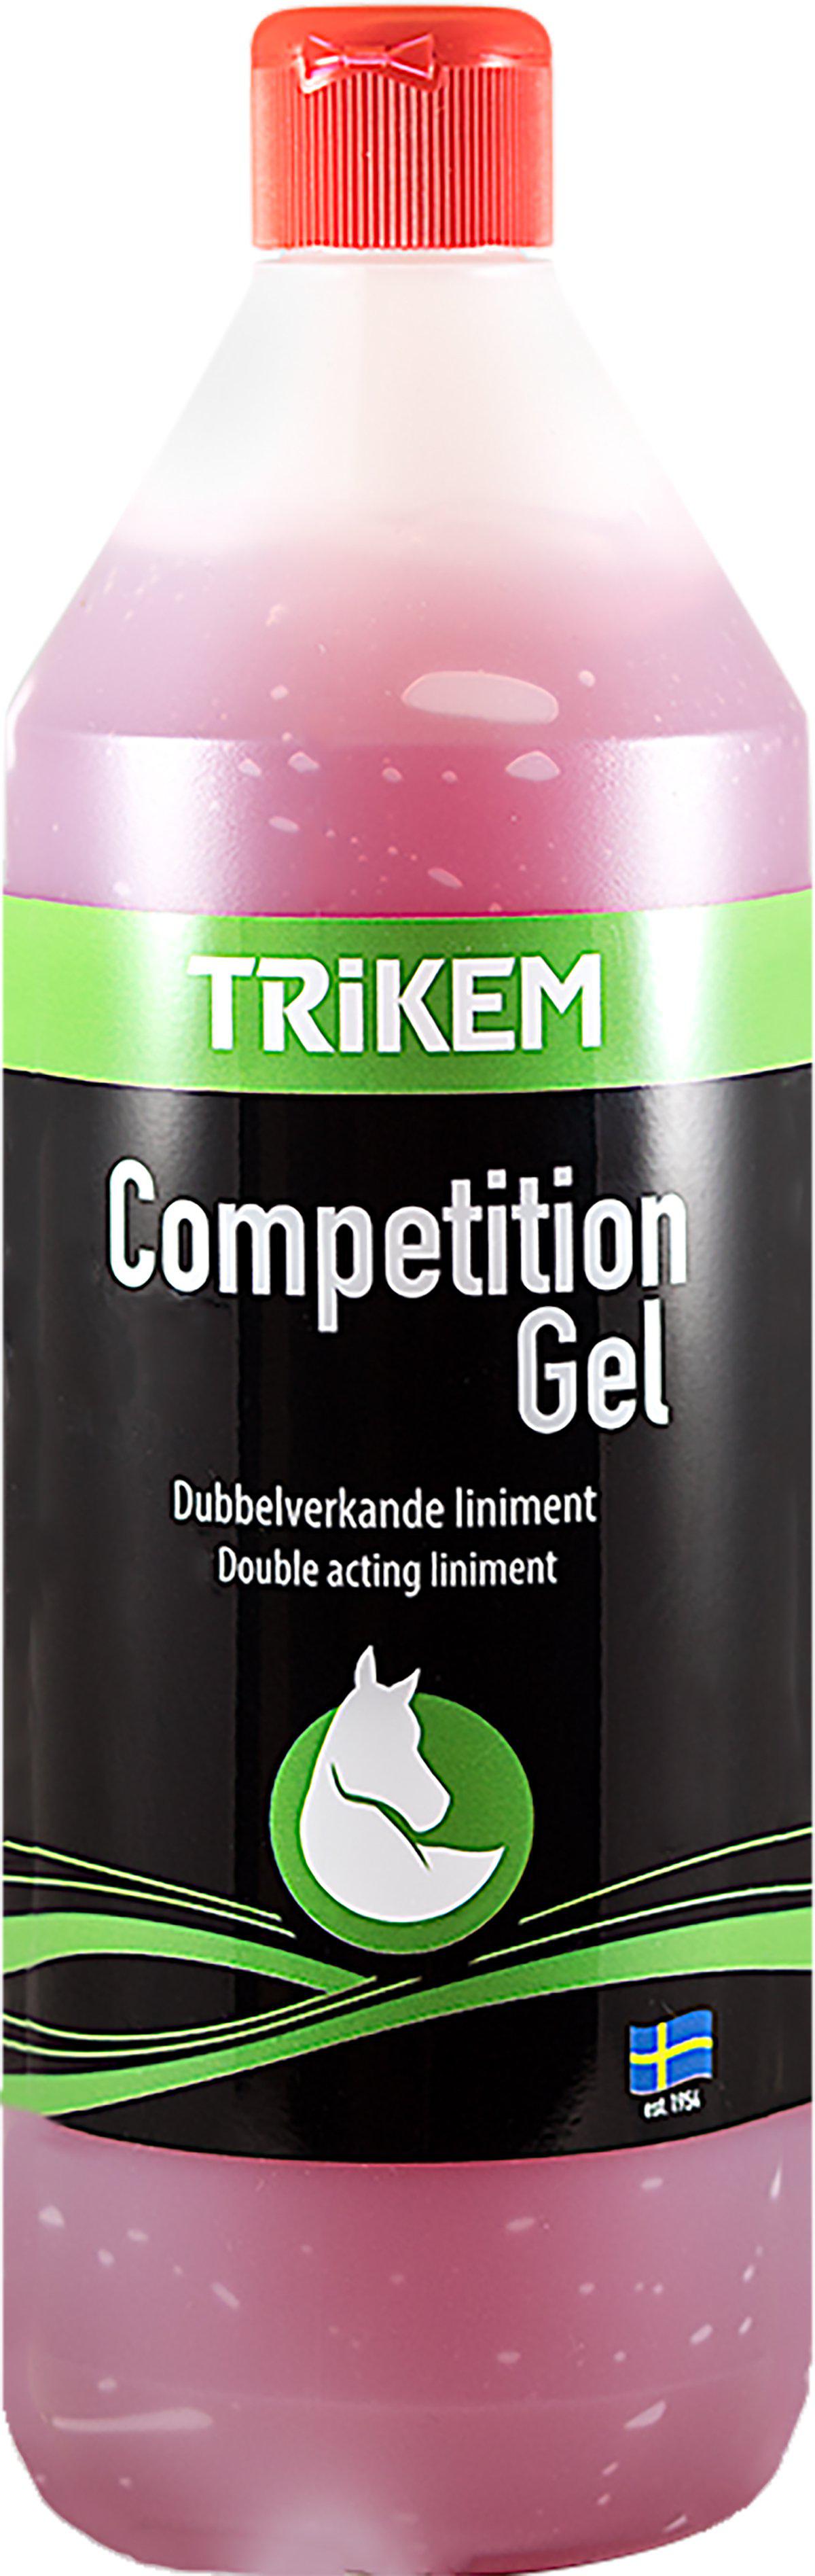 TRIKEM - Competion Gel Ps 1L - (822.7030) - Kjæledyr og utstyr